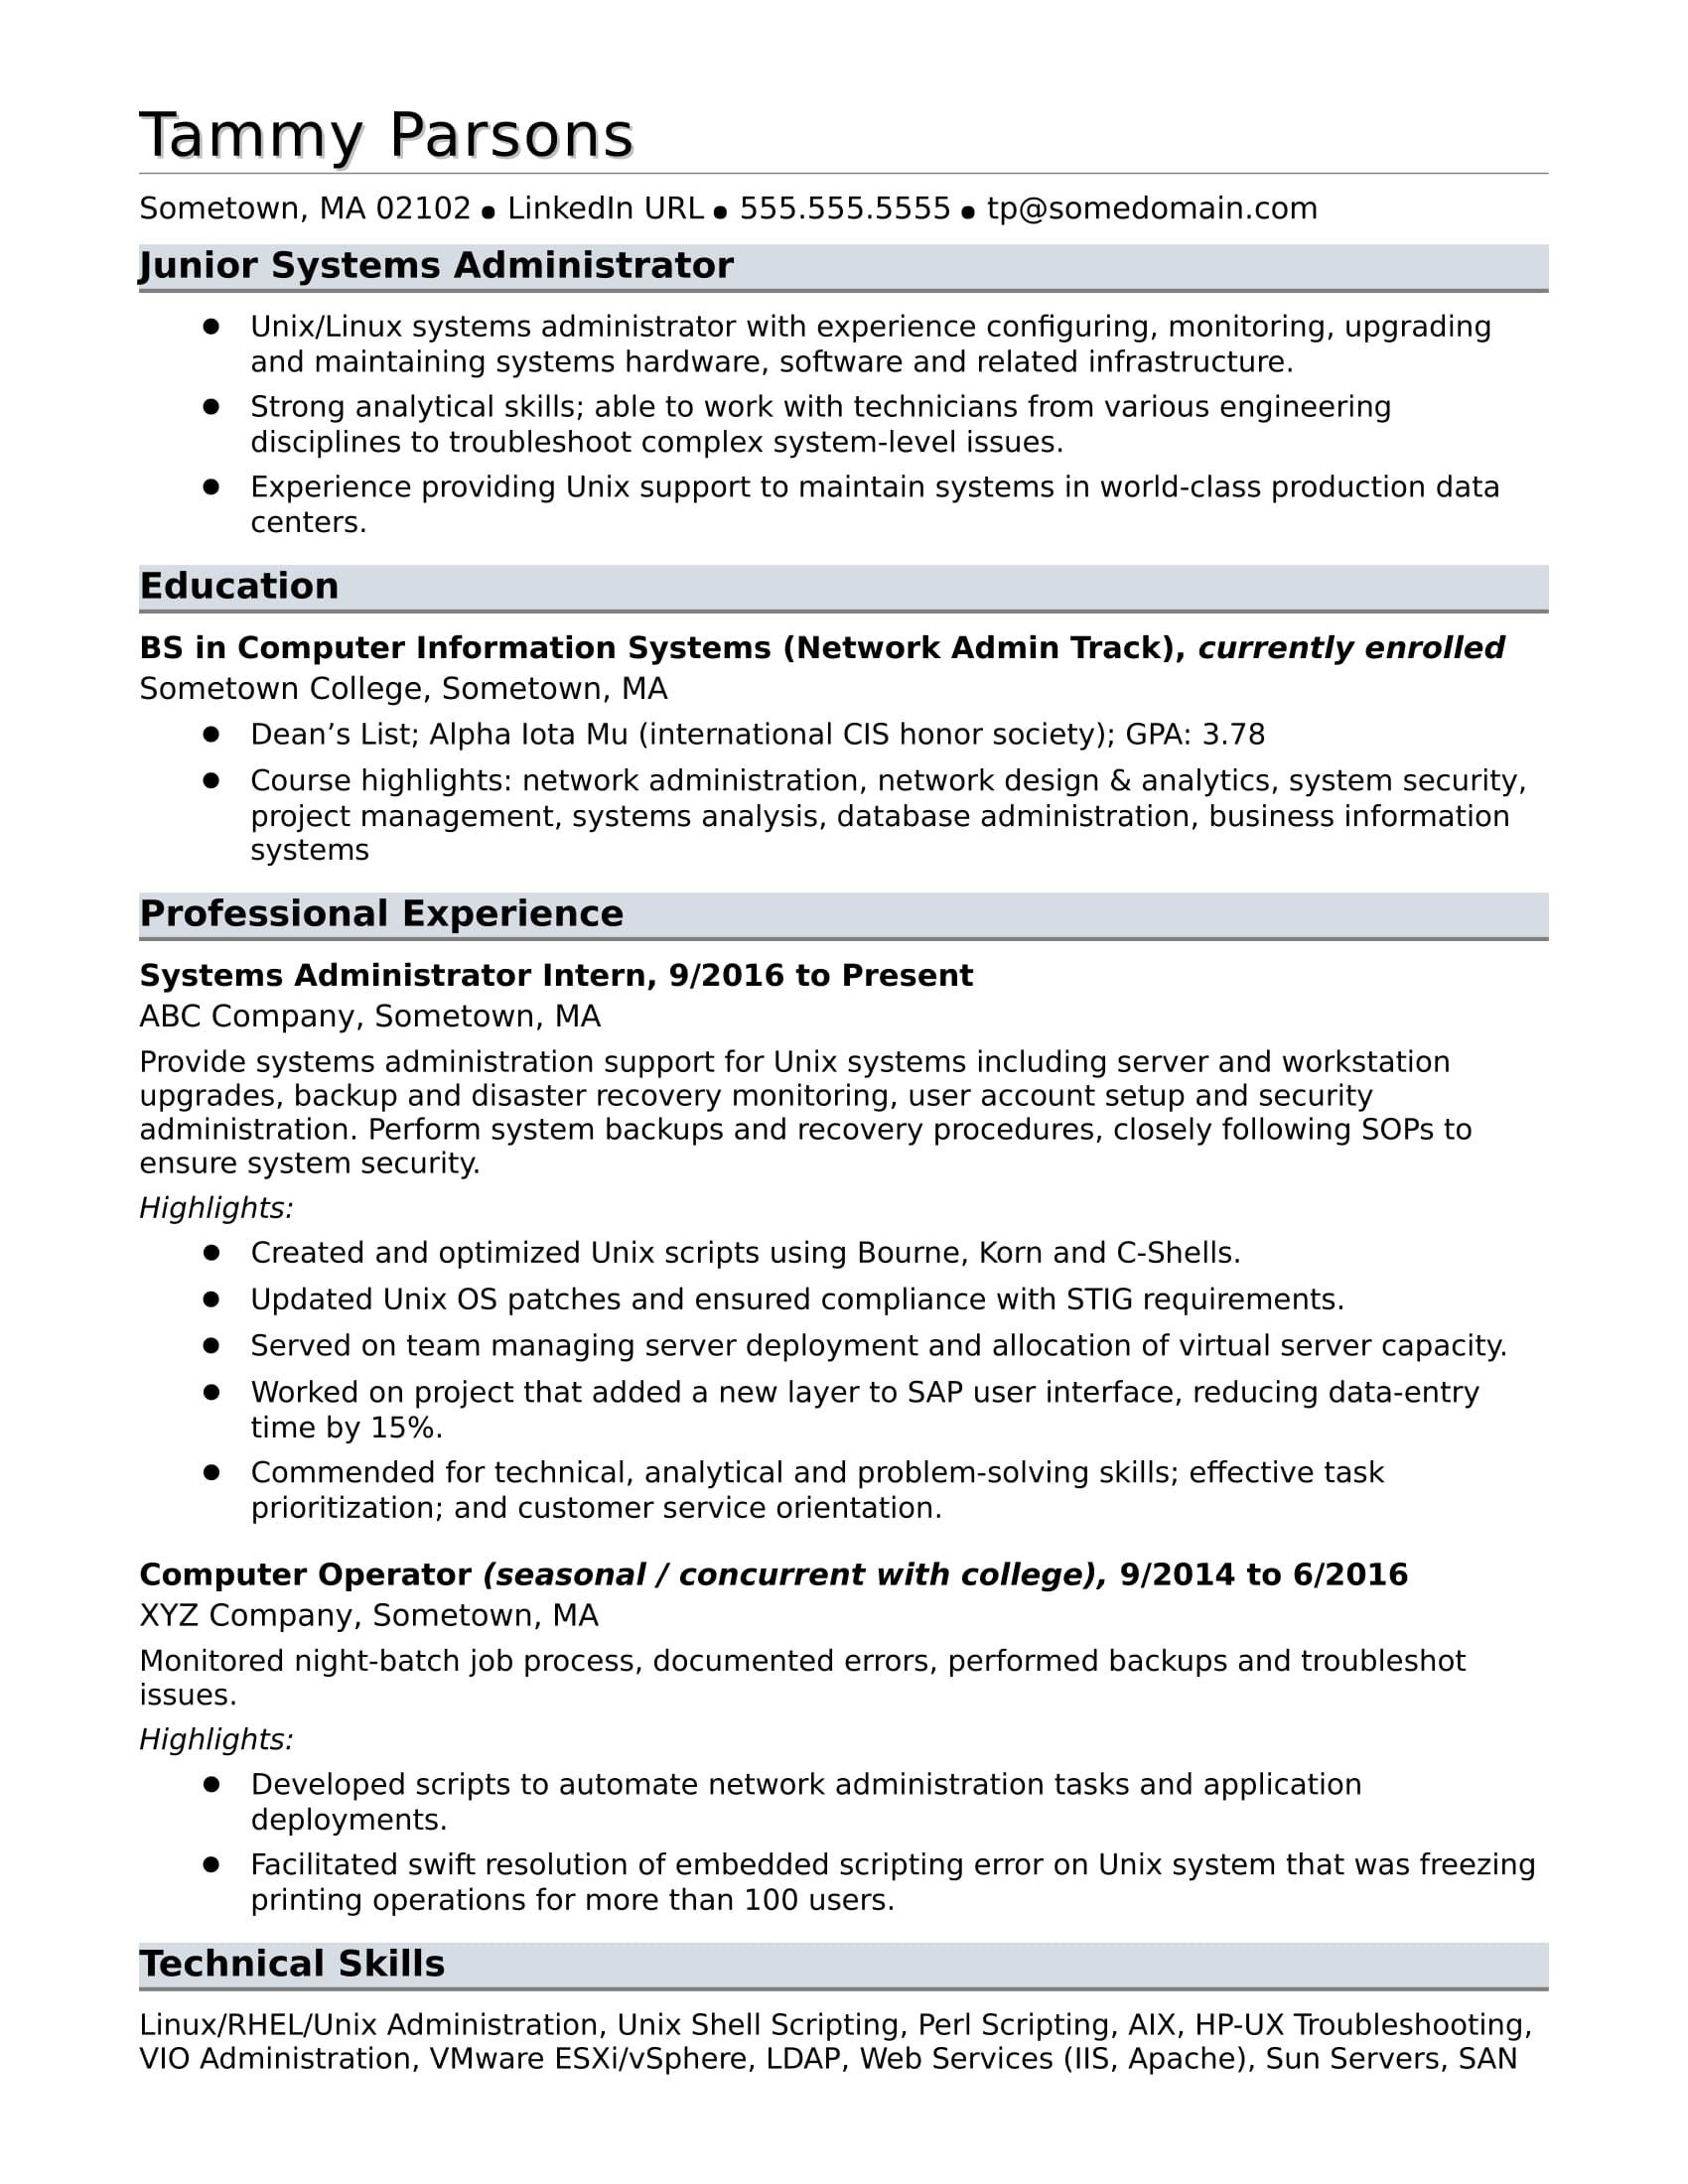 Data Center Operations Engineer Sample Resume Sample Resume for An Entry-level Systems Administrator Monster.com